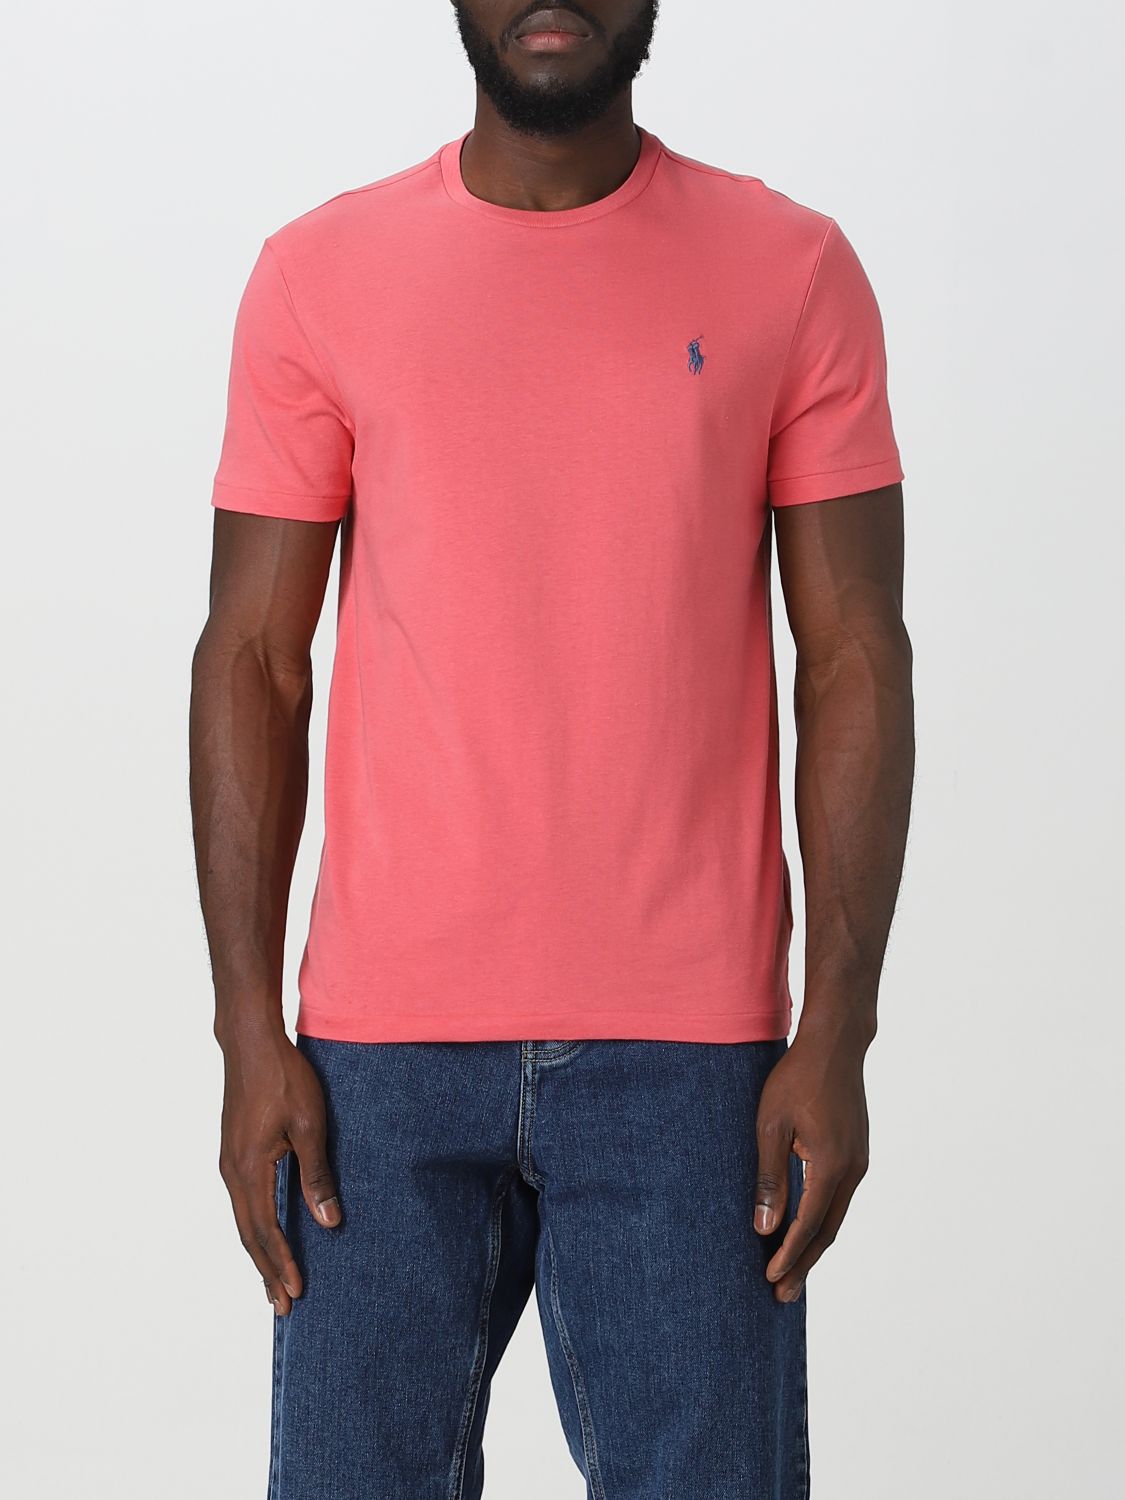 Polo Ralph Lauren T-shirt  Herren Farbe Cherry